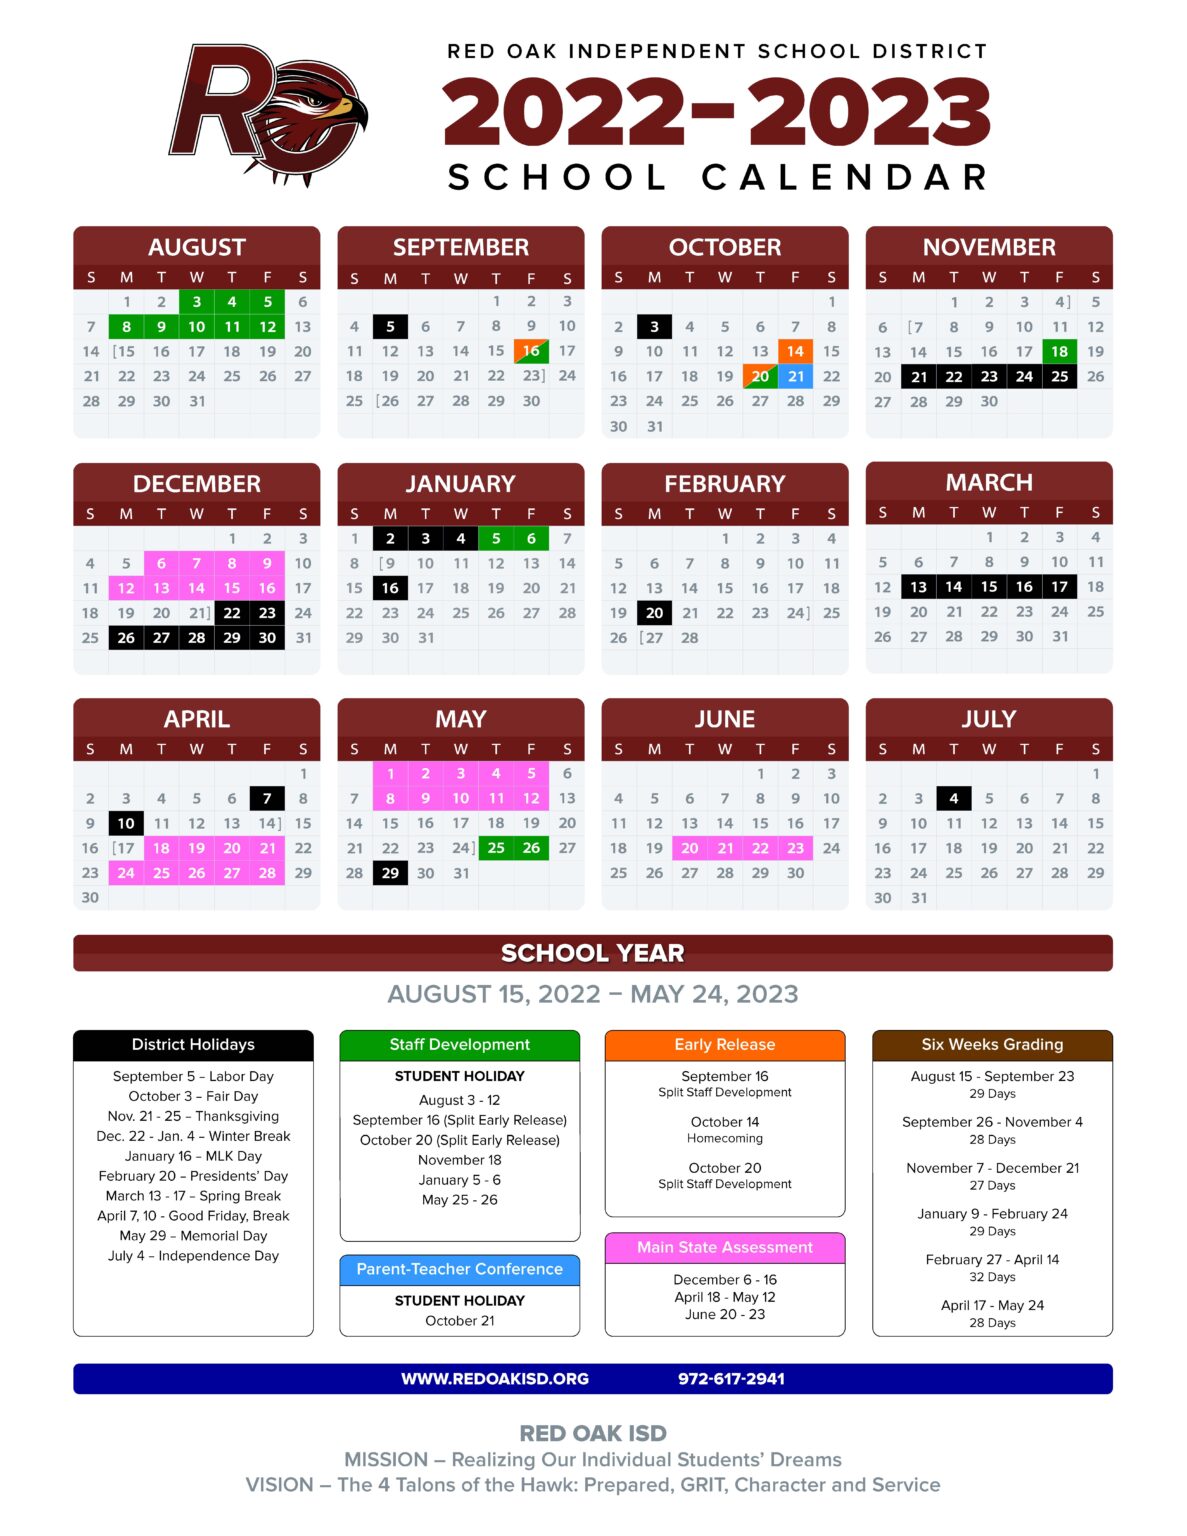 Red Oak ISD 2022-2023 School Calendar Emphasizes Instructional Time In